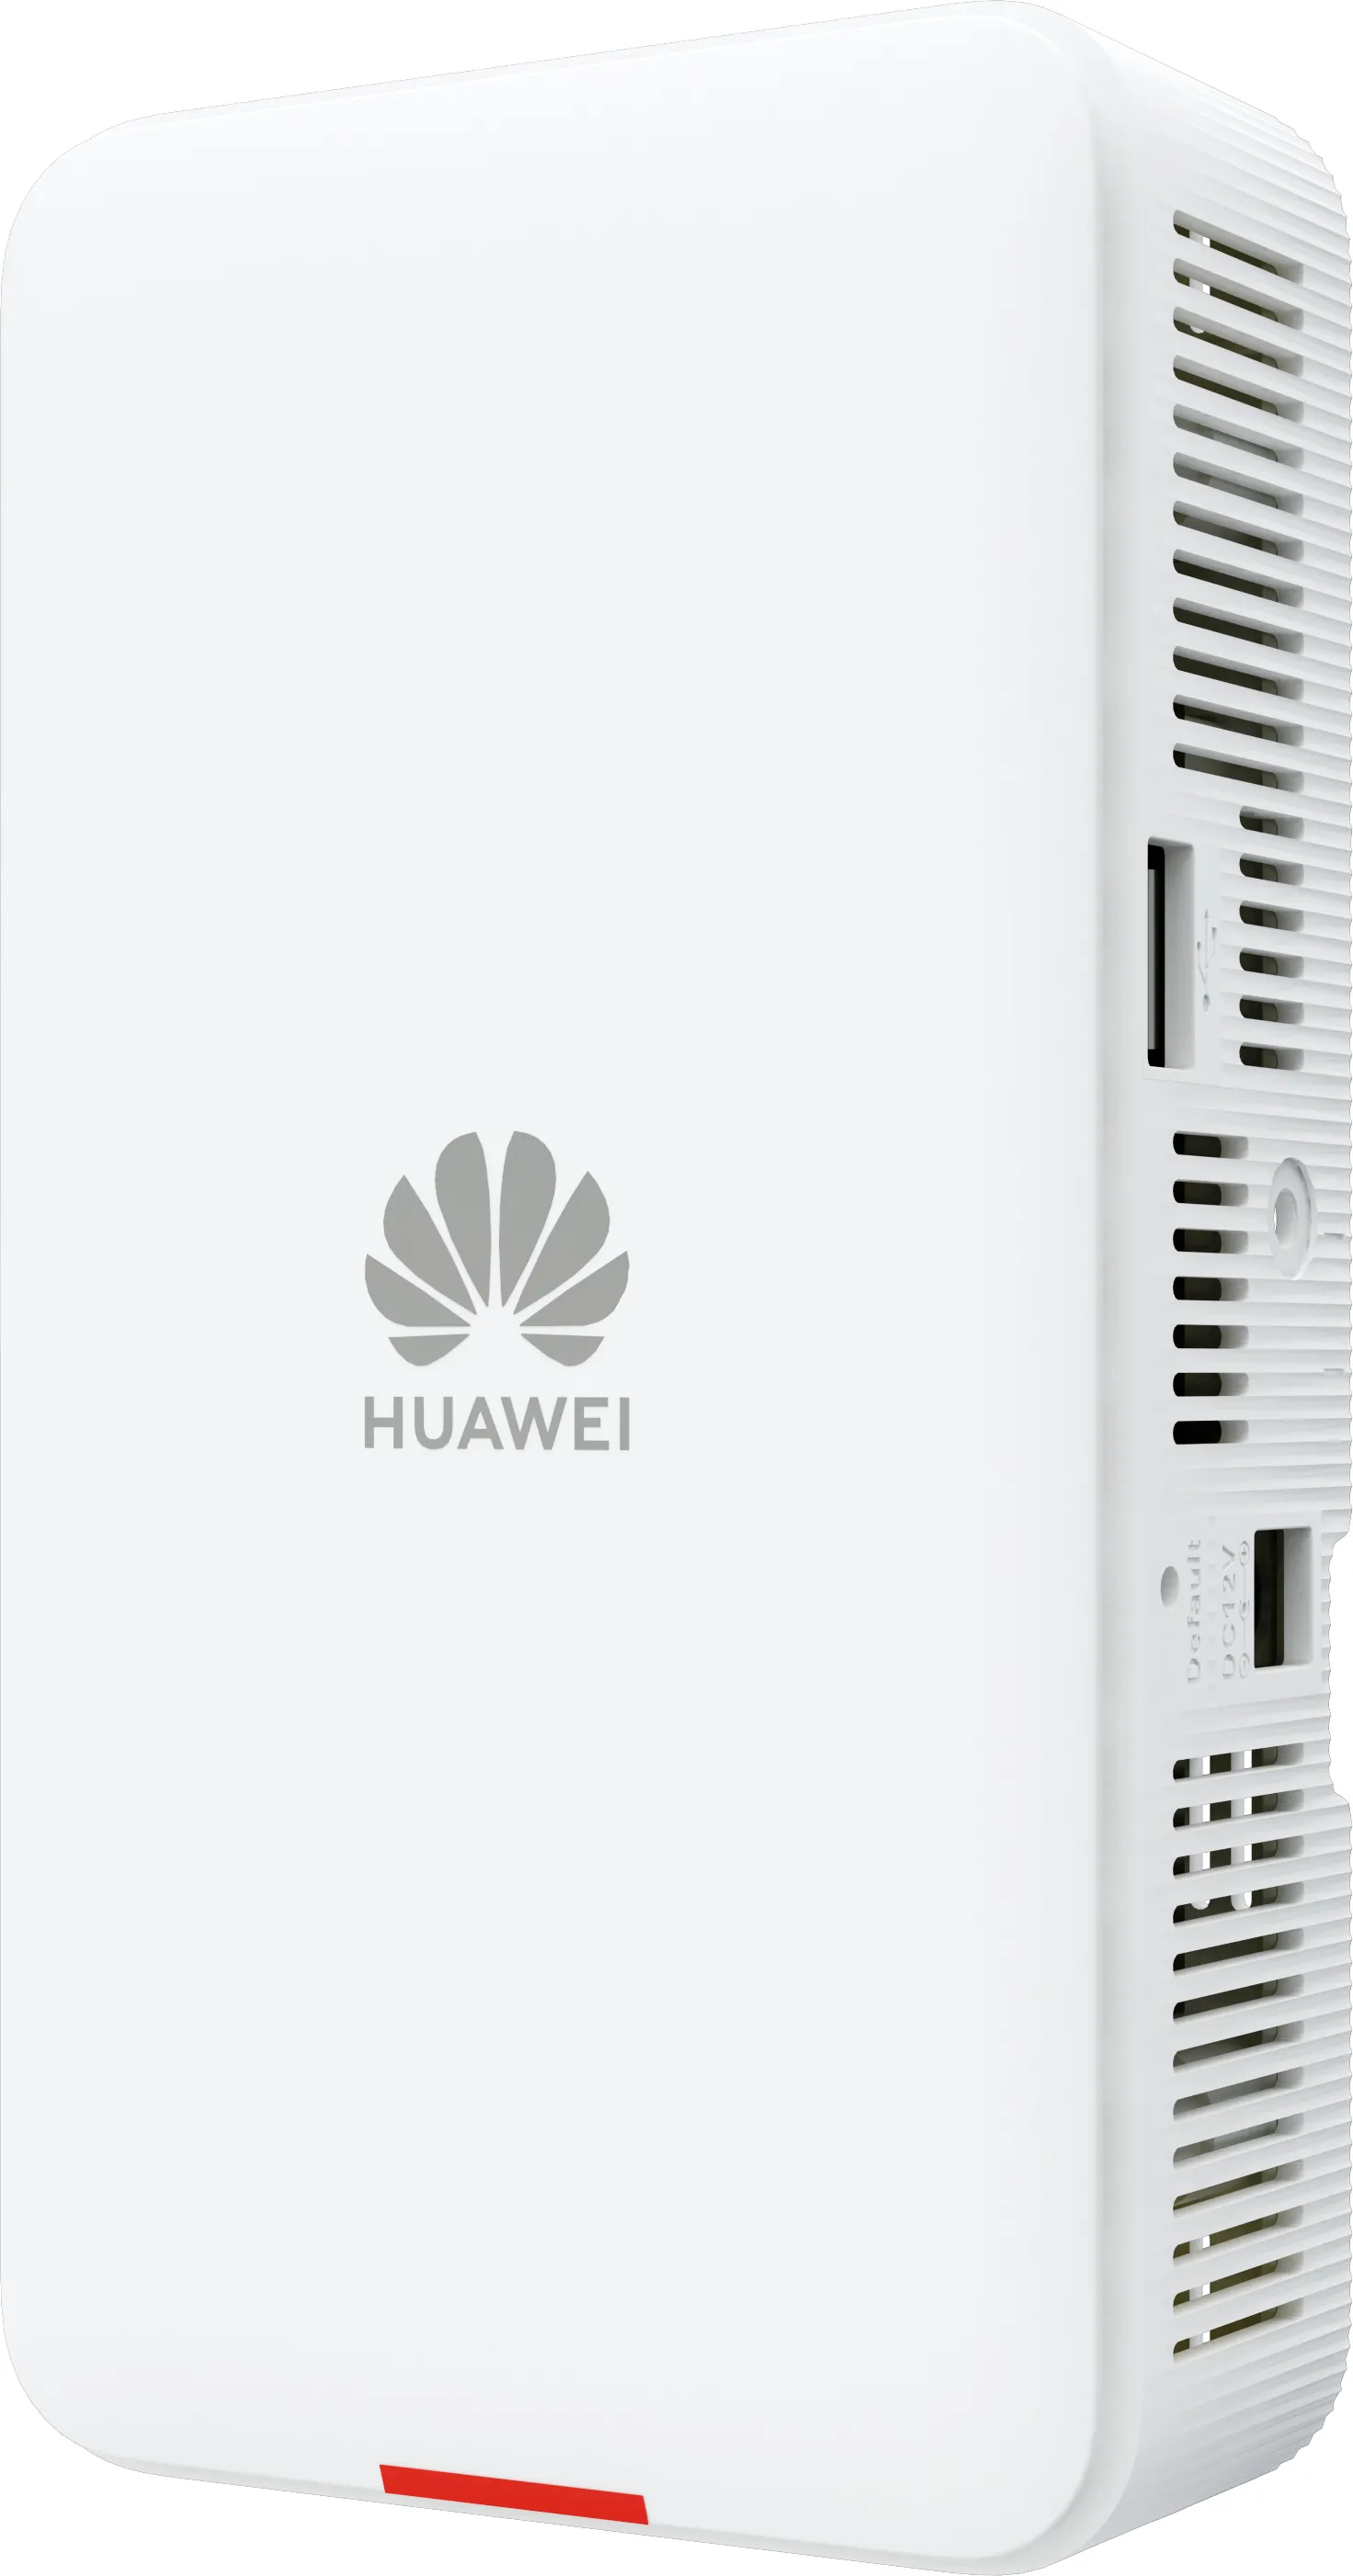 Vente Huawei AirEngine 5761-11W Huawei au meilleur prix - visuel 4